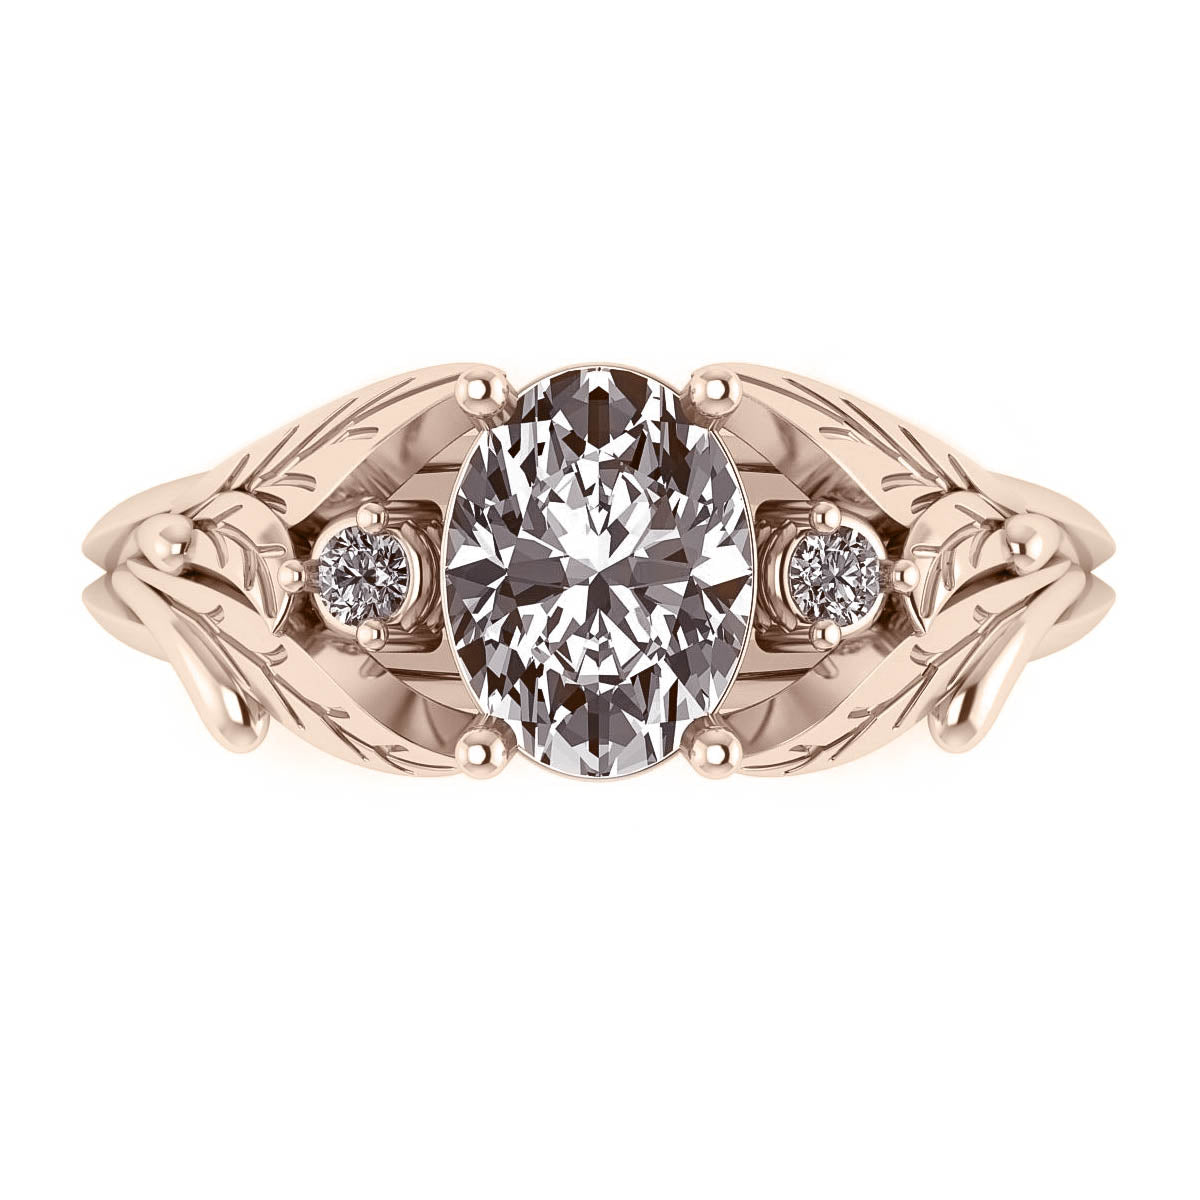 Wisteria | 8x6 mm oval gemstone setting with accent diamonds - Eden Garden Jewelry™